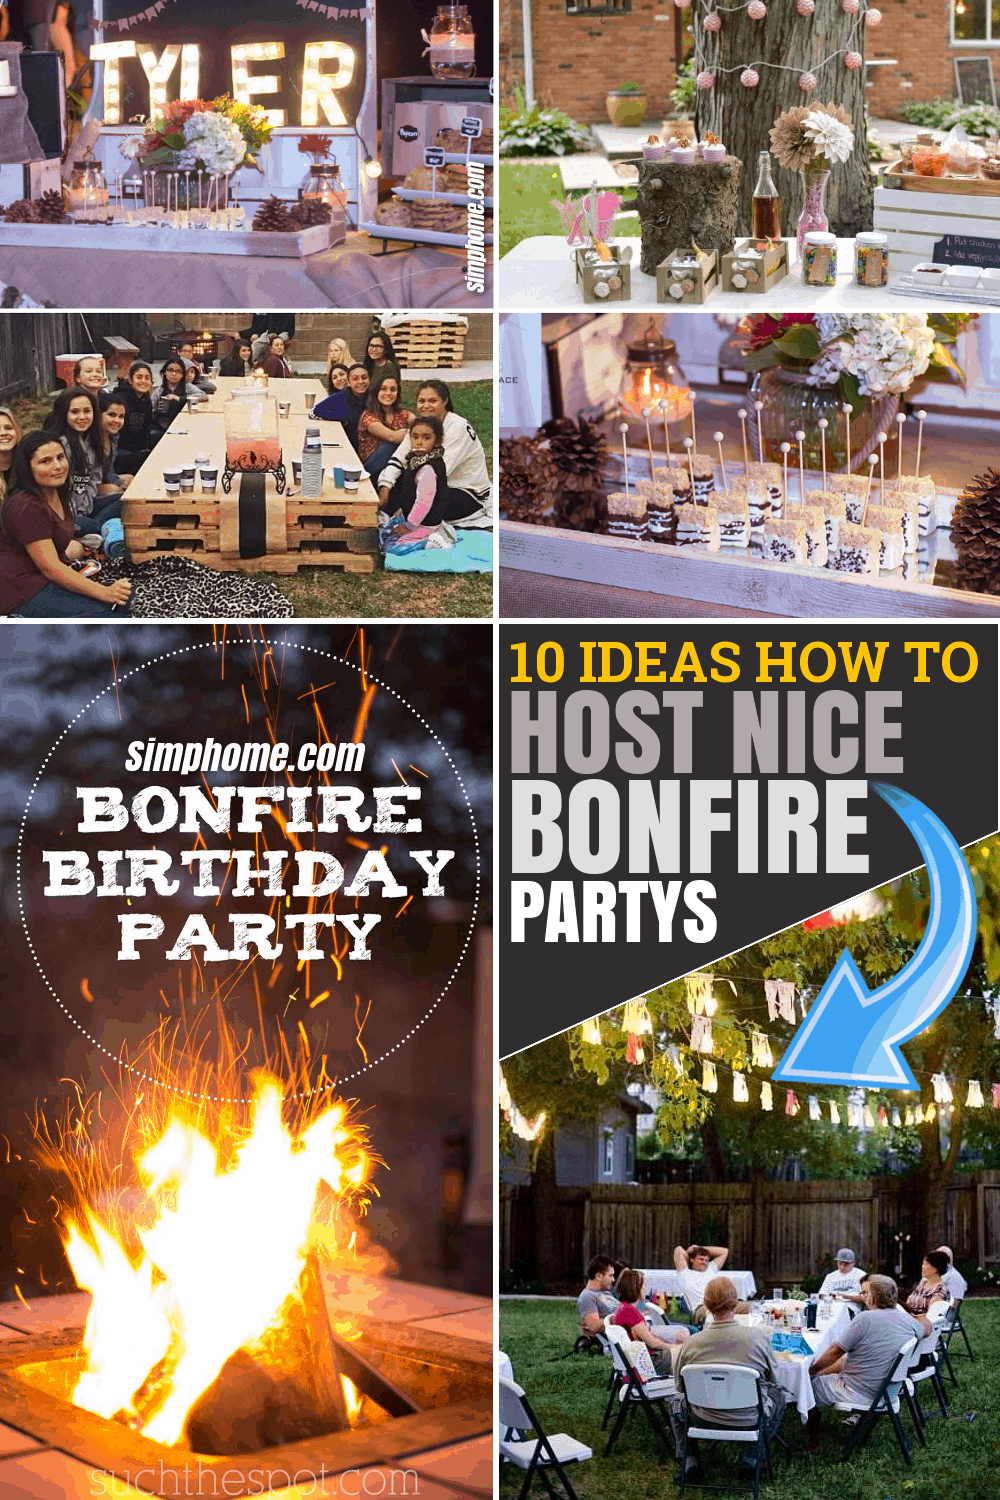 10 ideas How to host fun backyard bonfire parties via SIMPHOME.COM Featured Pinterest Image